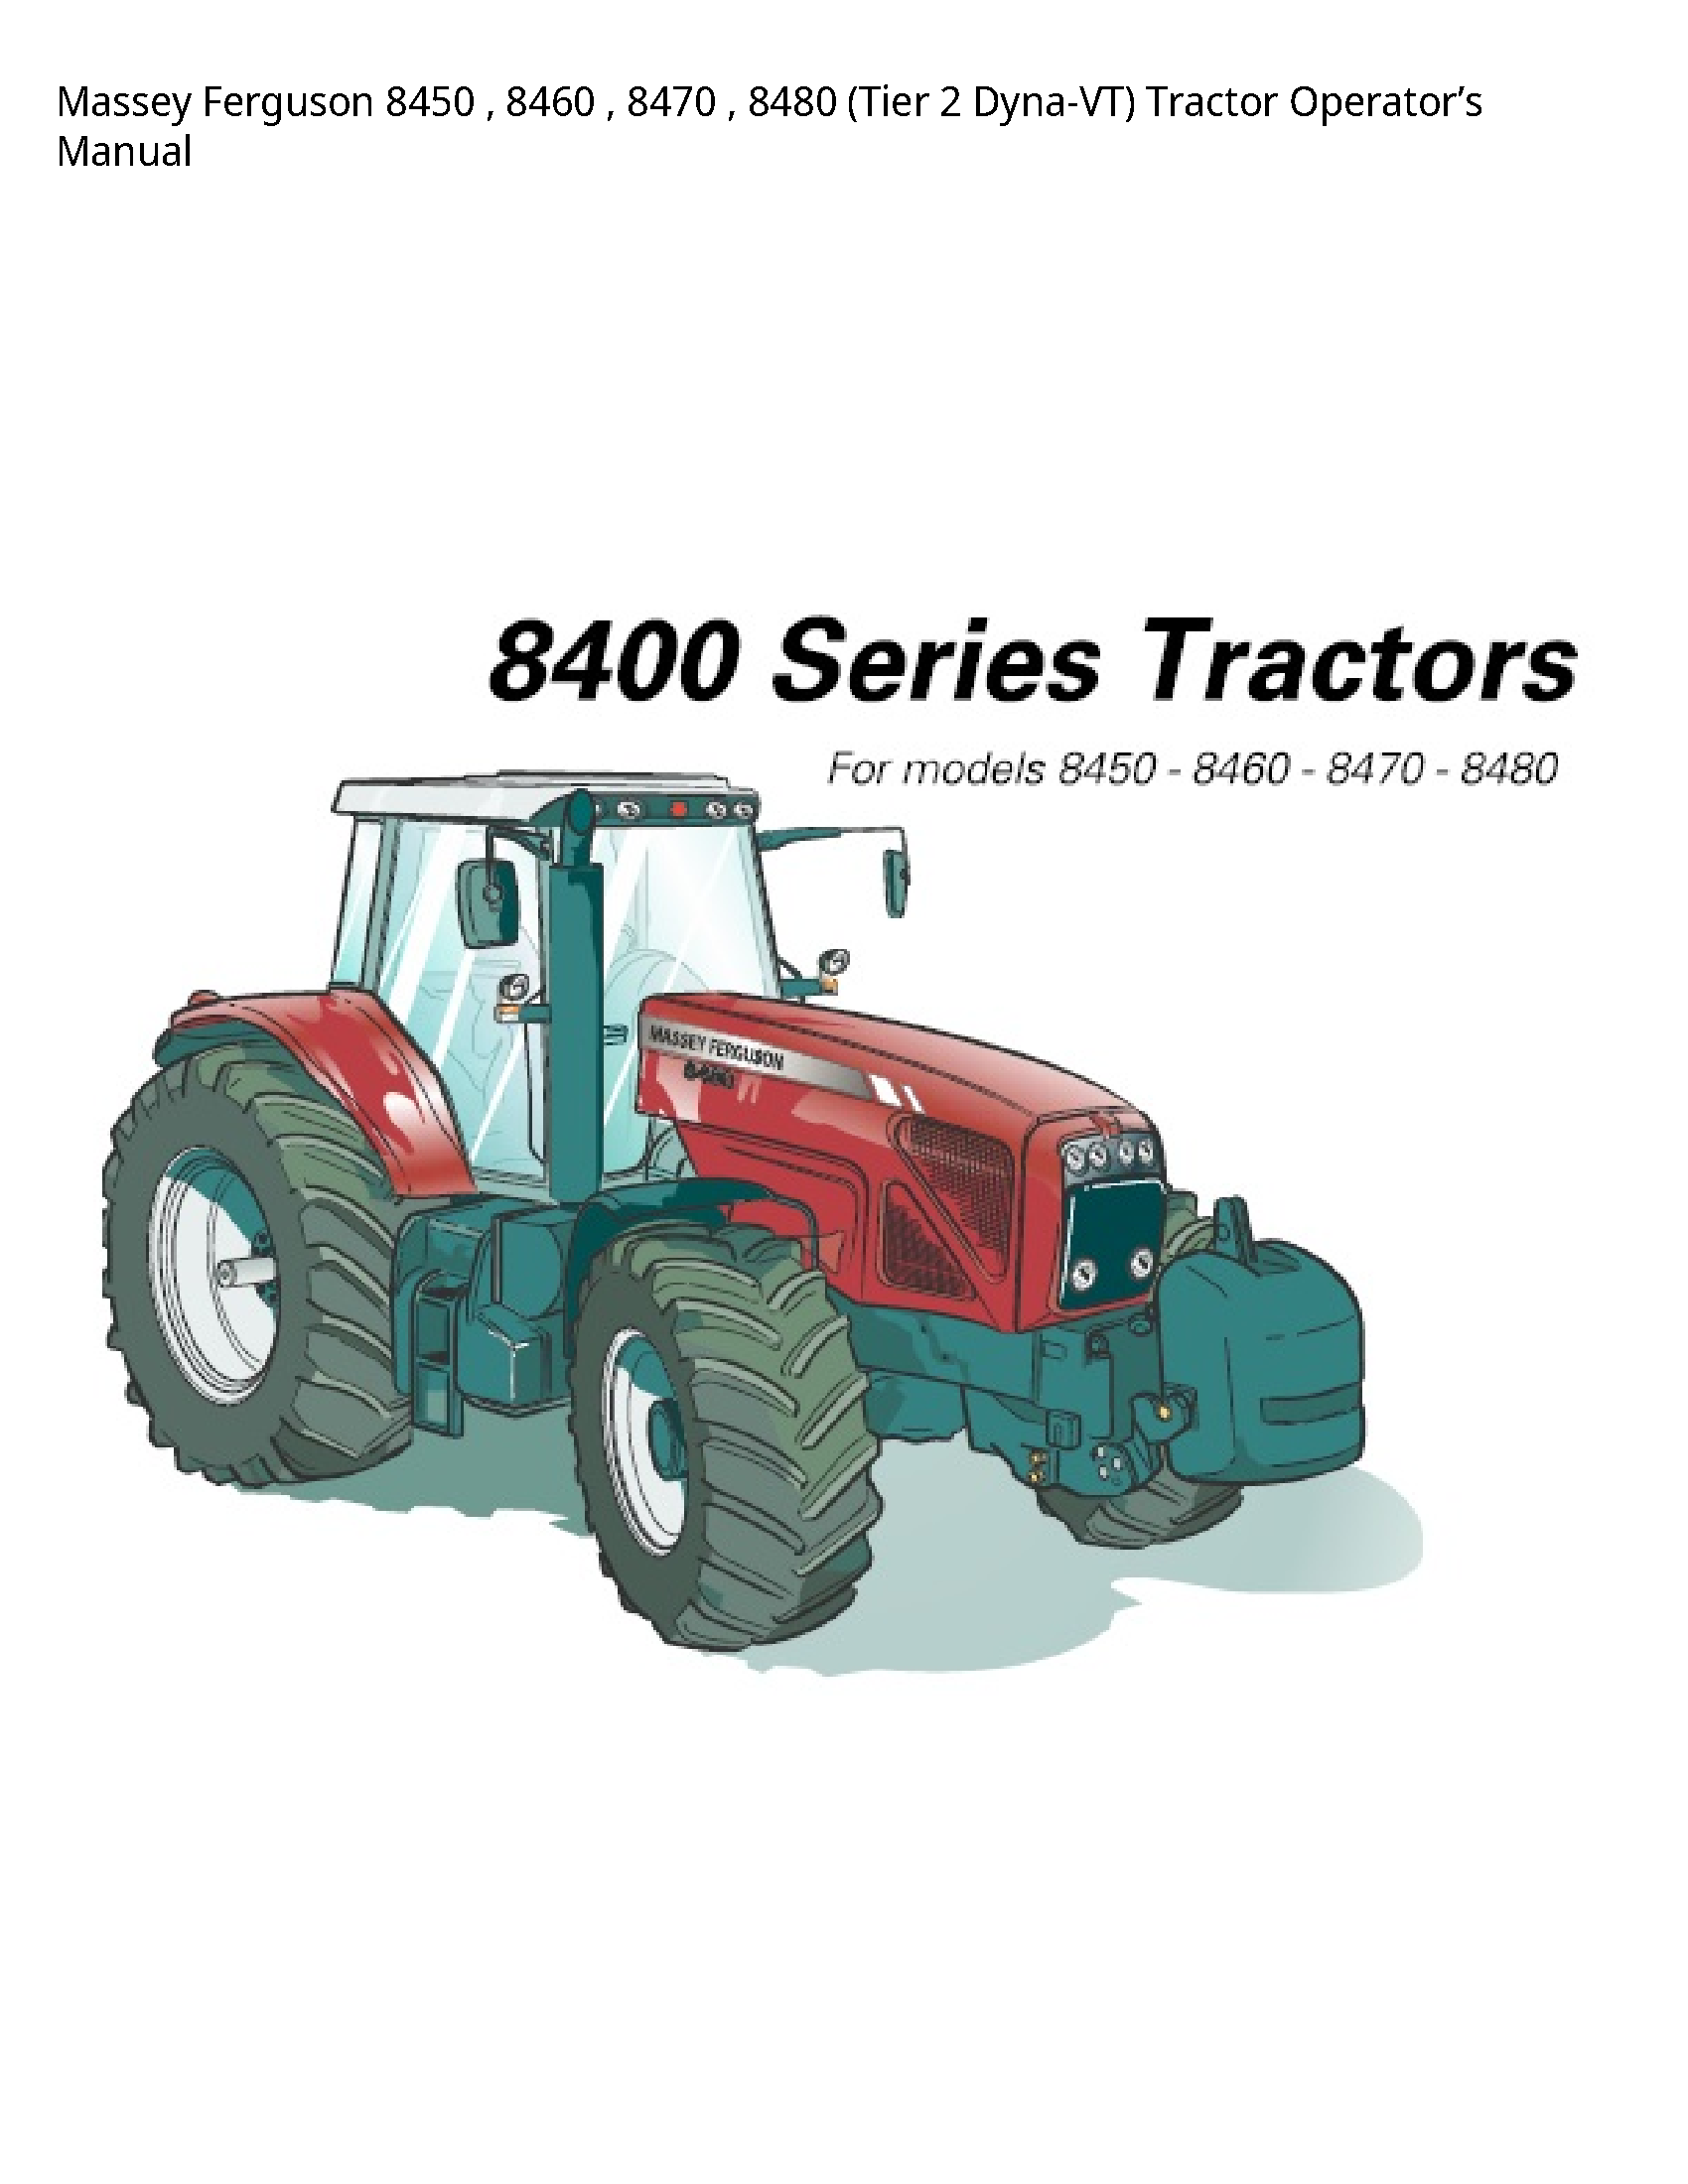 Massey Ferguson 8450 (Tier Dyna-VT) Tractor Operator’s manual